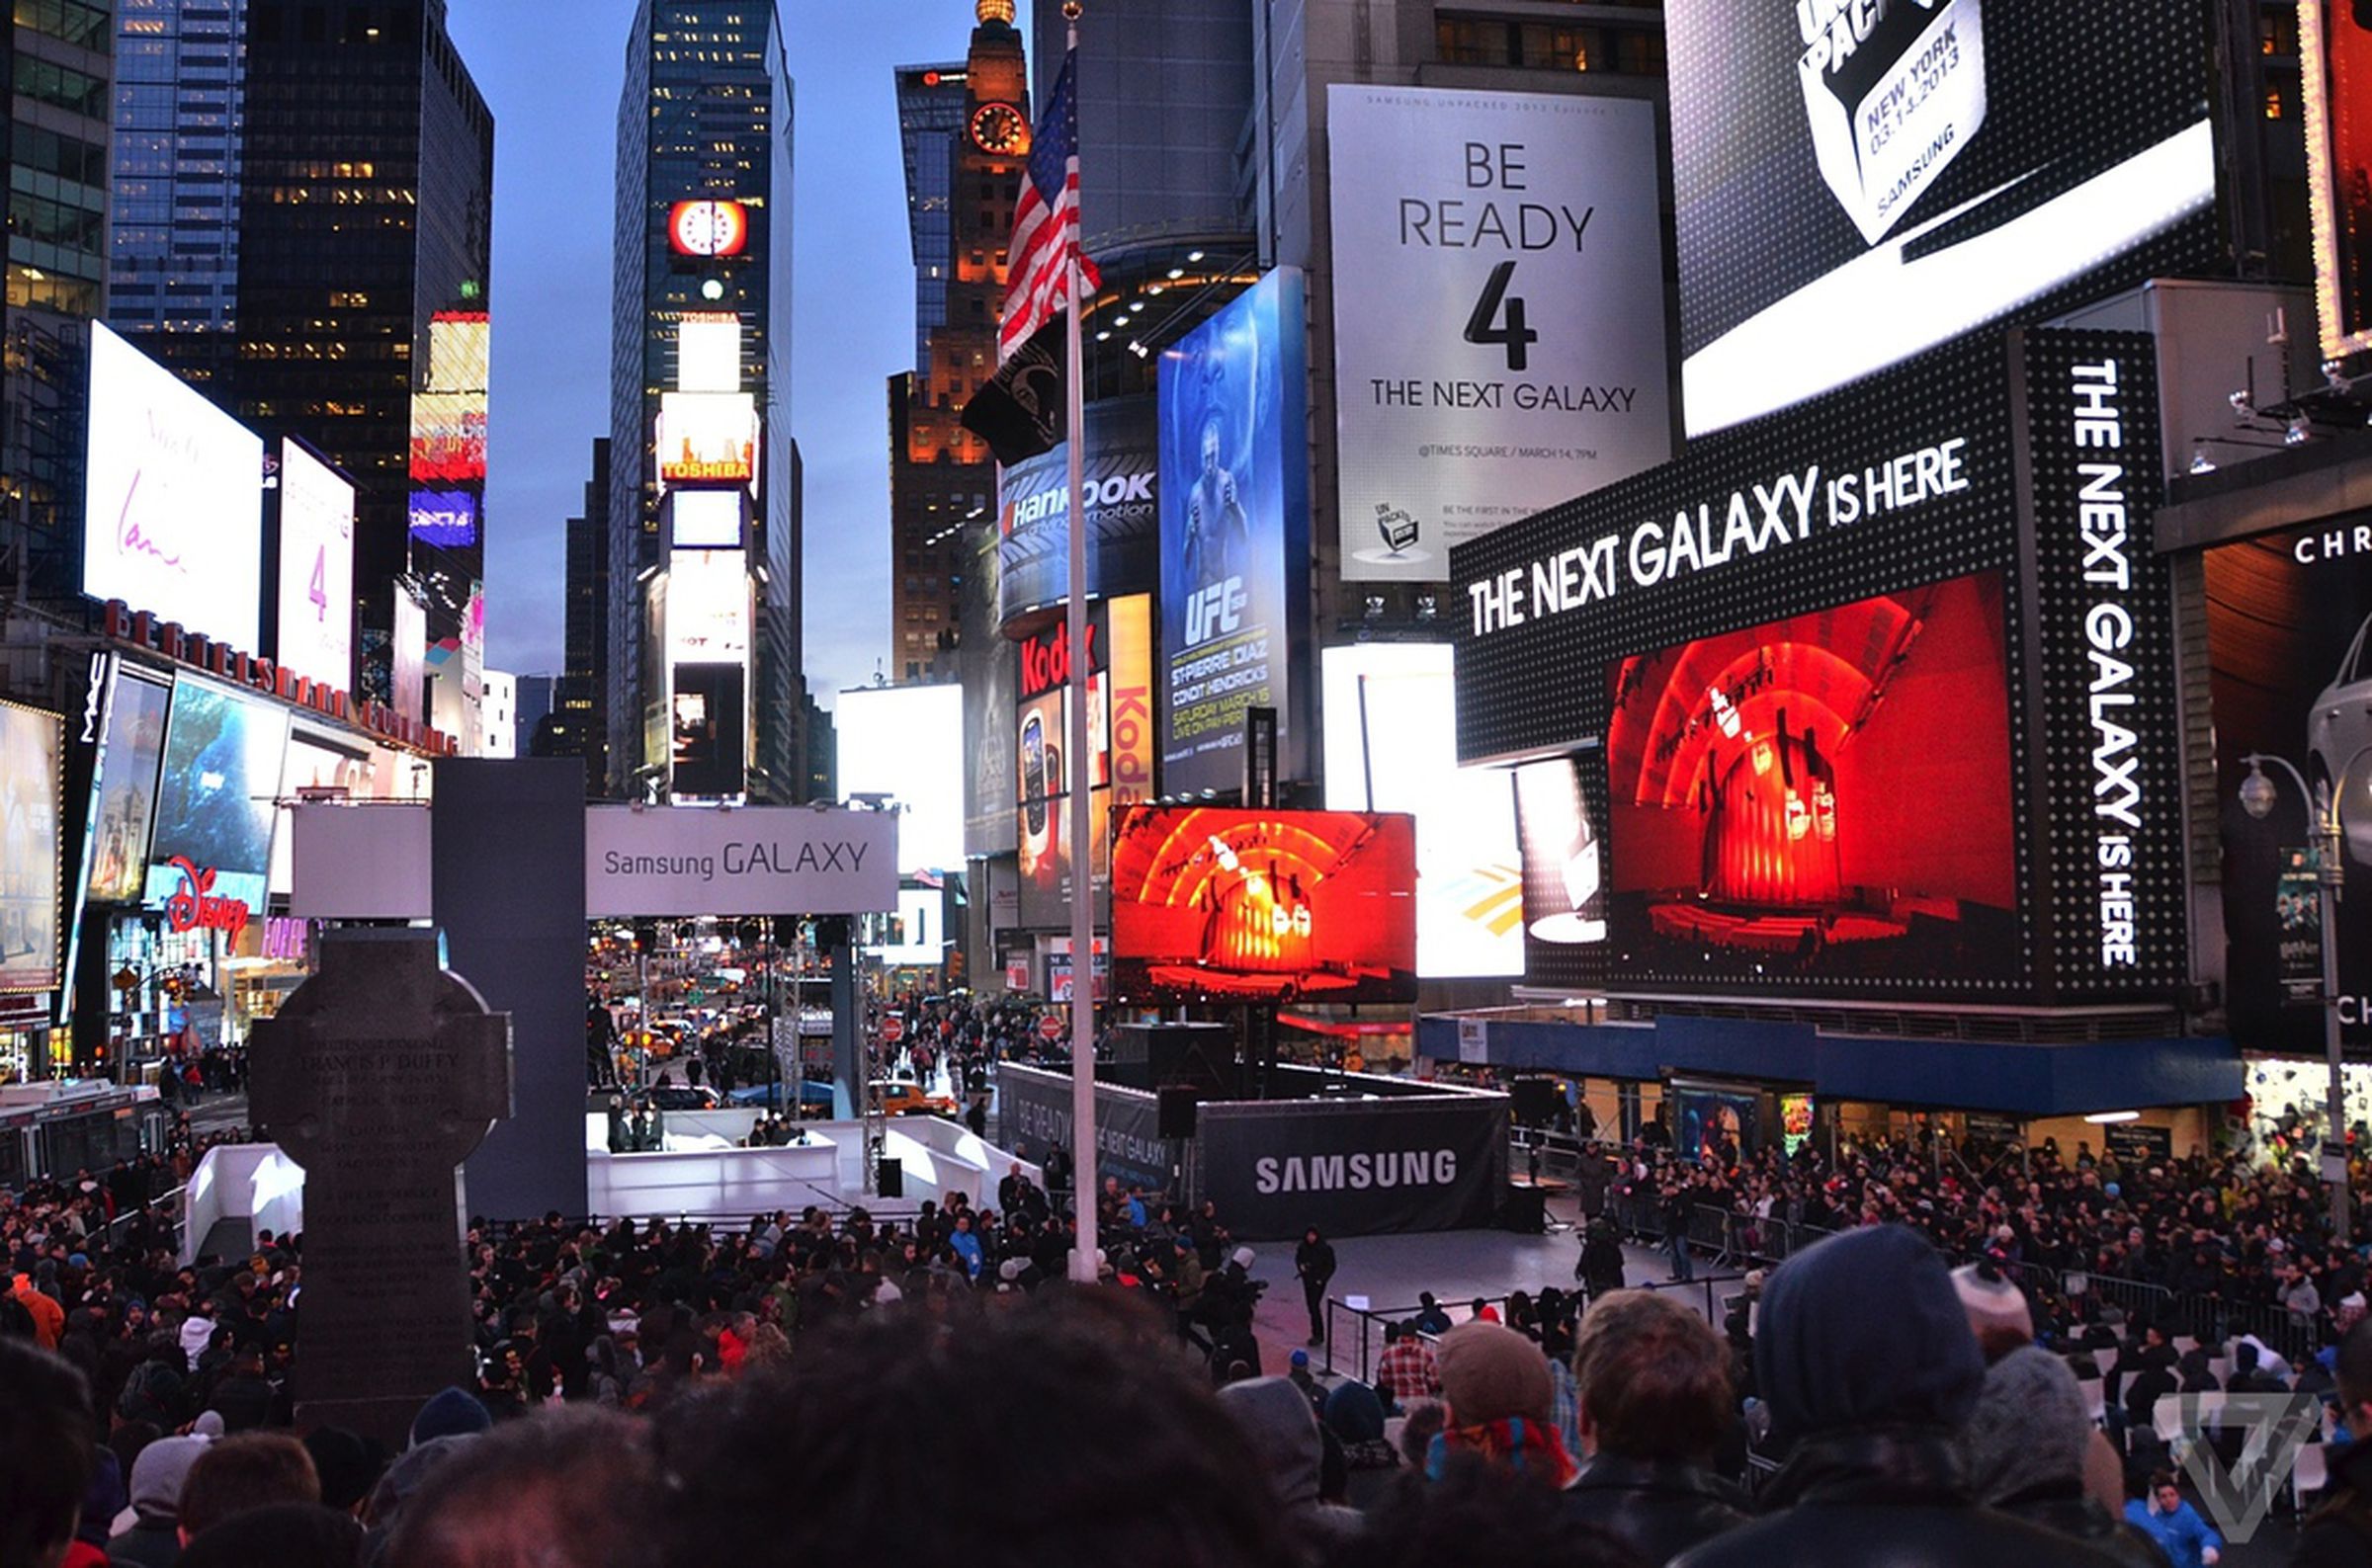 Samsung Galaxy S4 Times Square photos